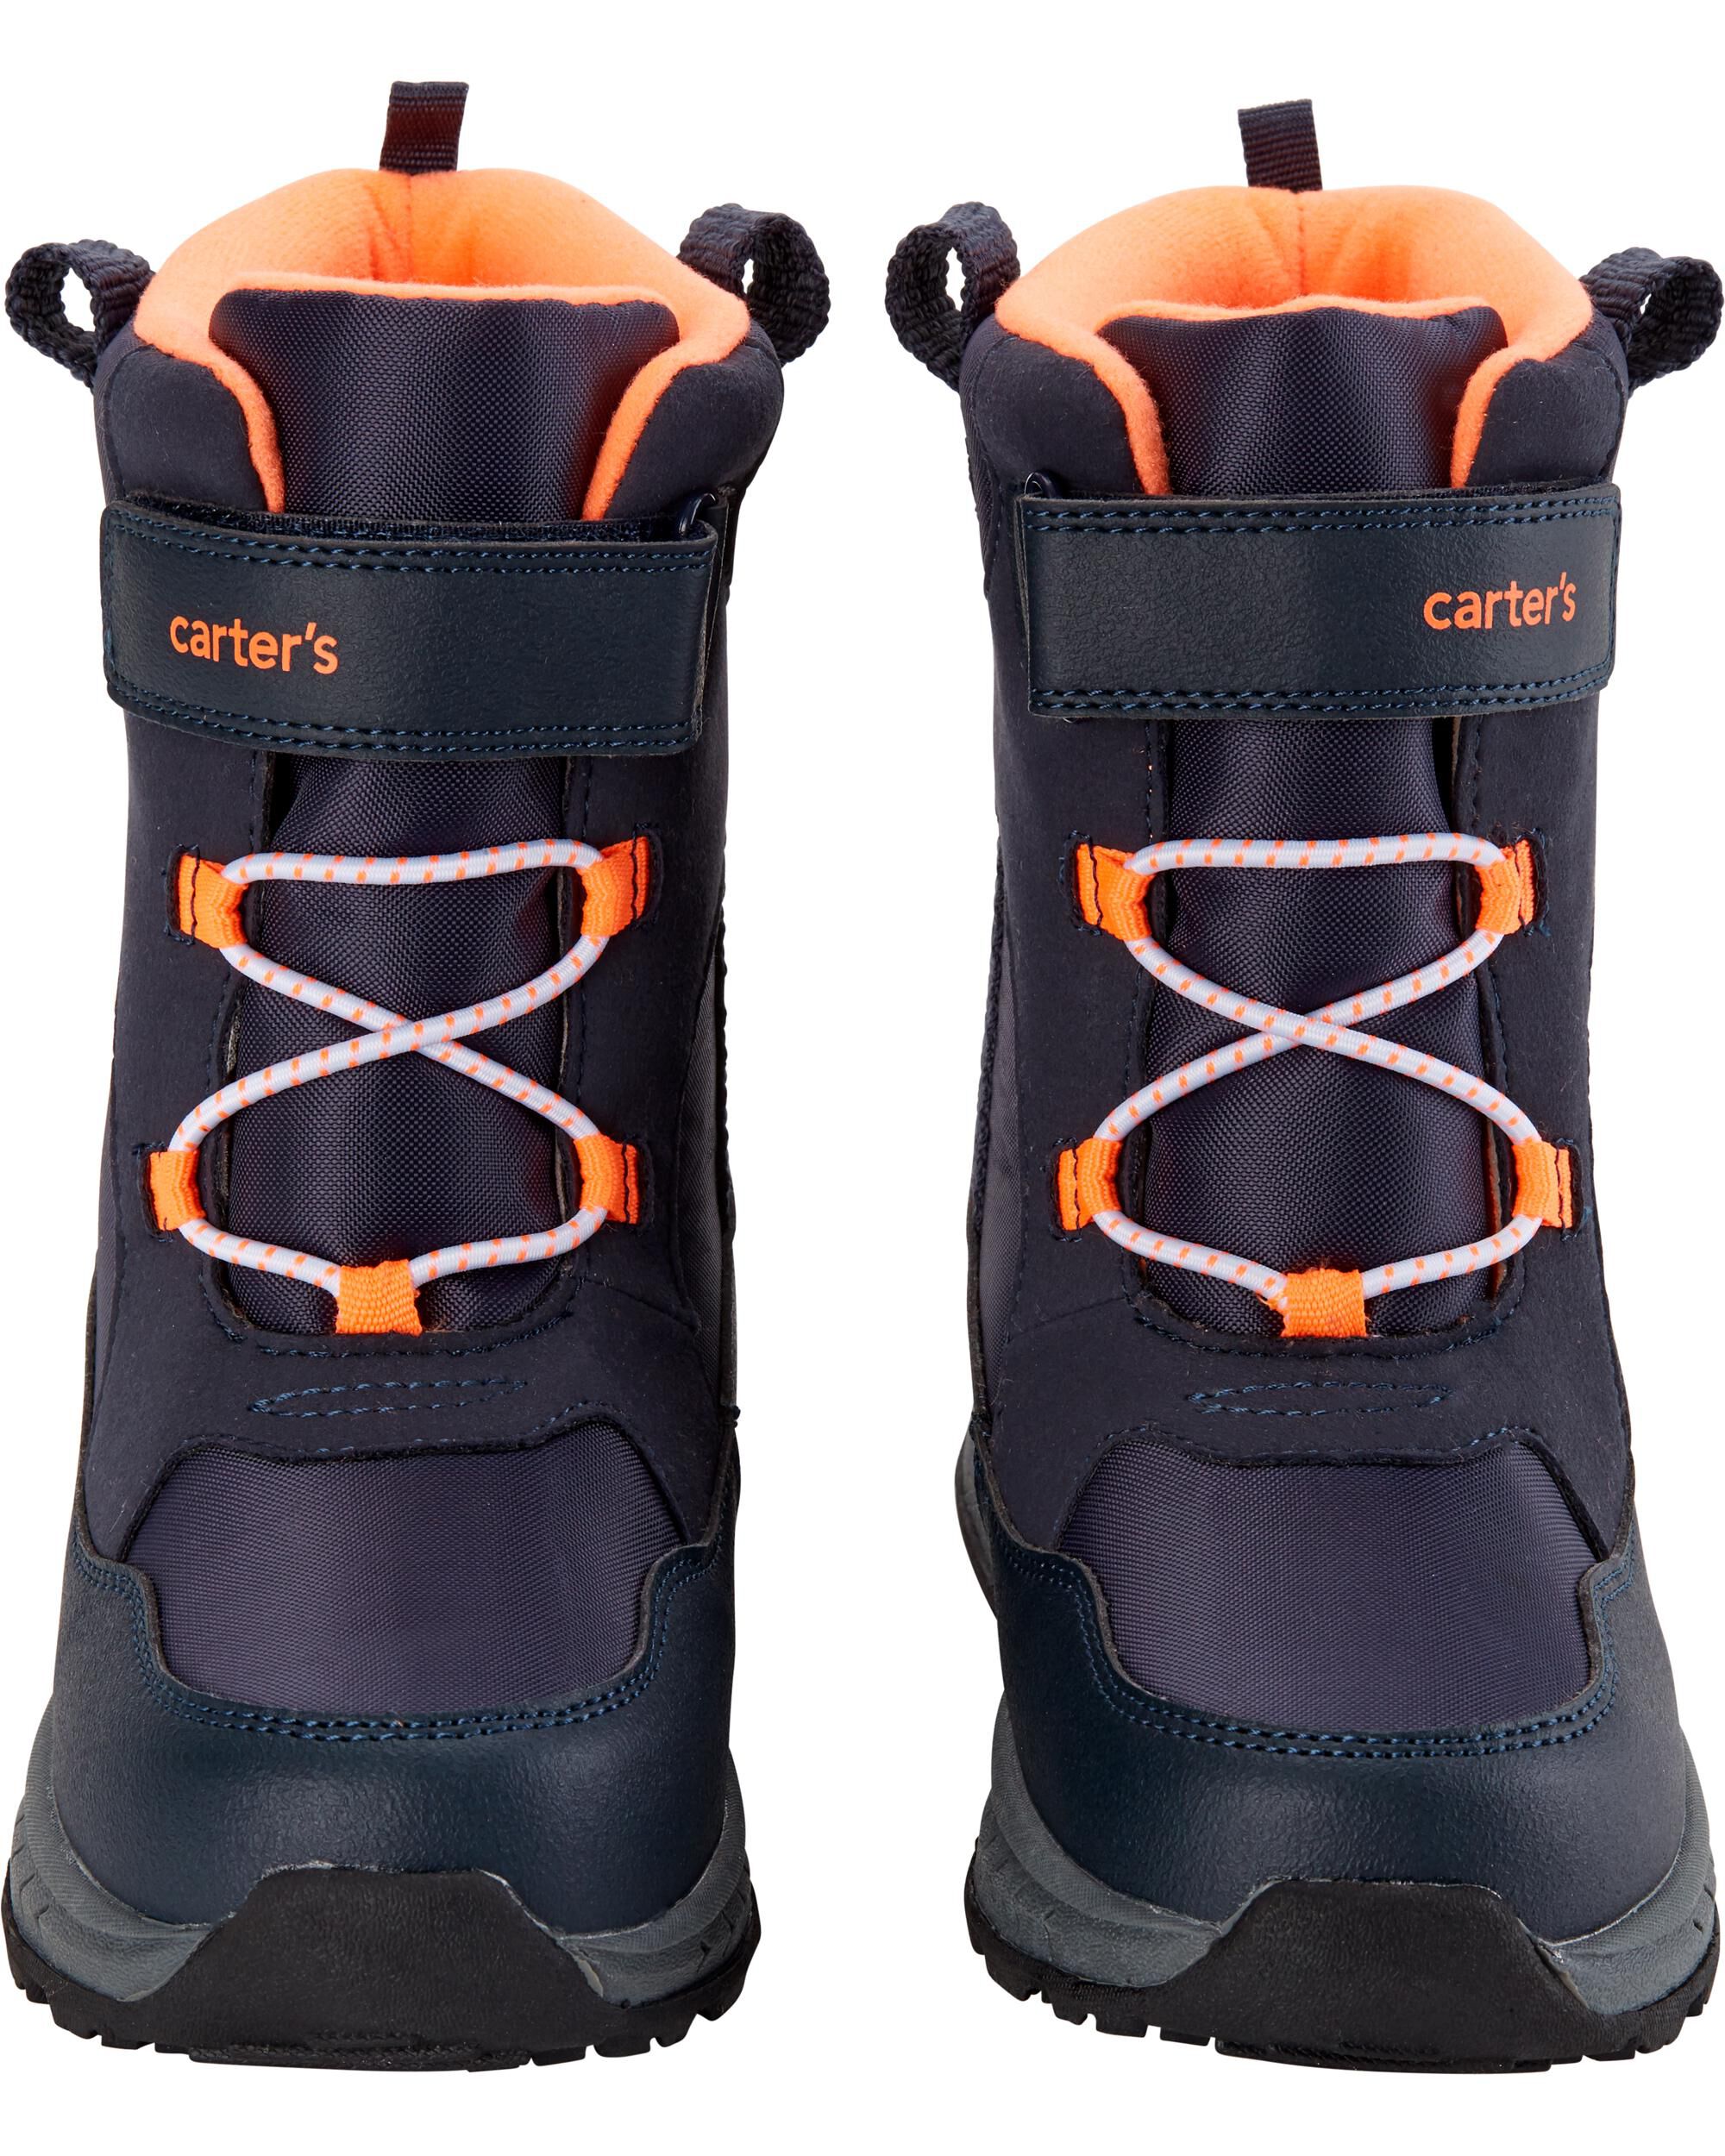 Carter's Snow Boots | carters.com